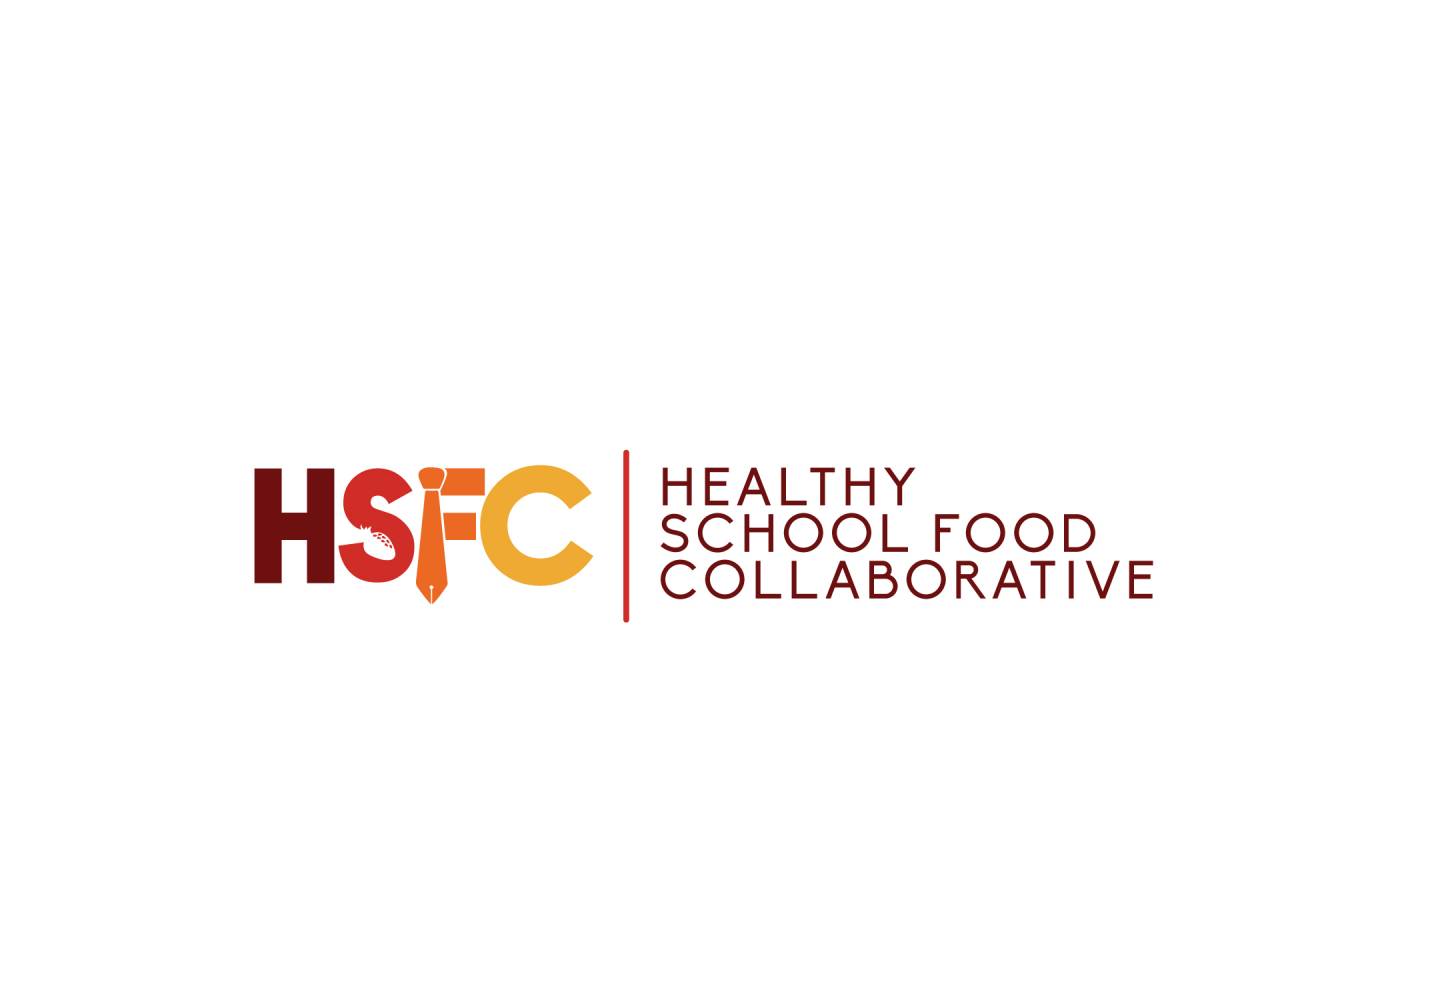 The Healthy School Food Collaborative